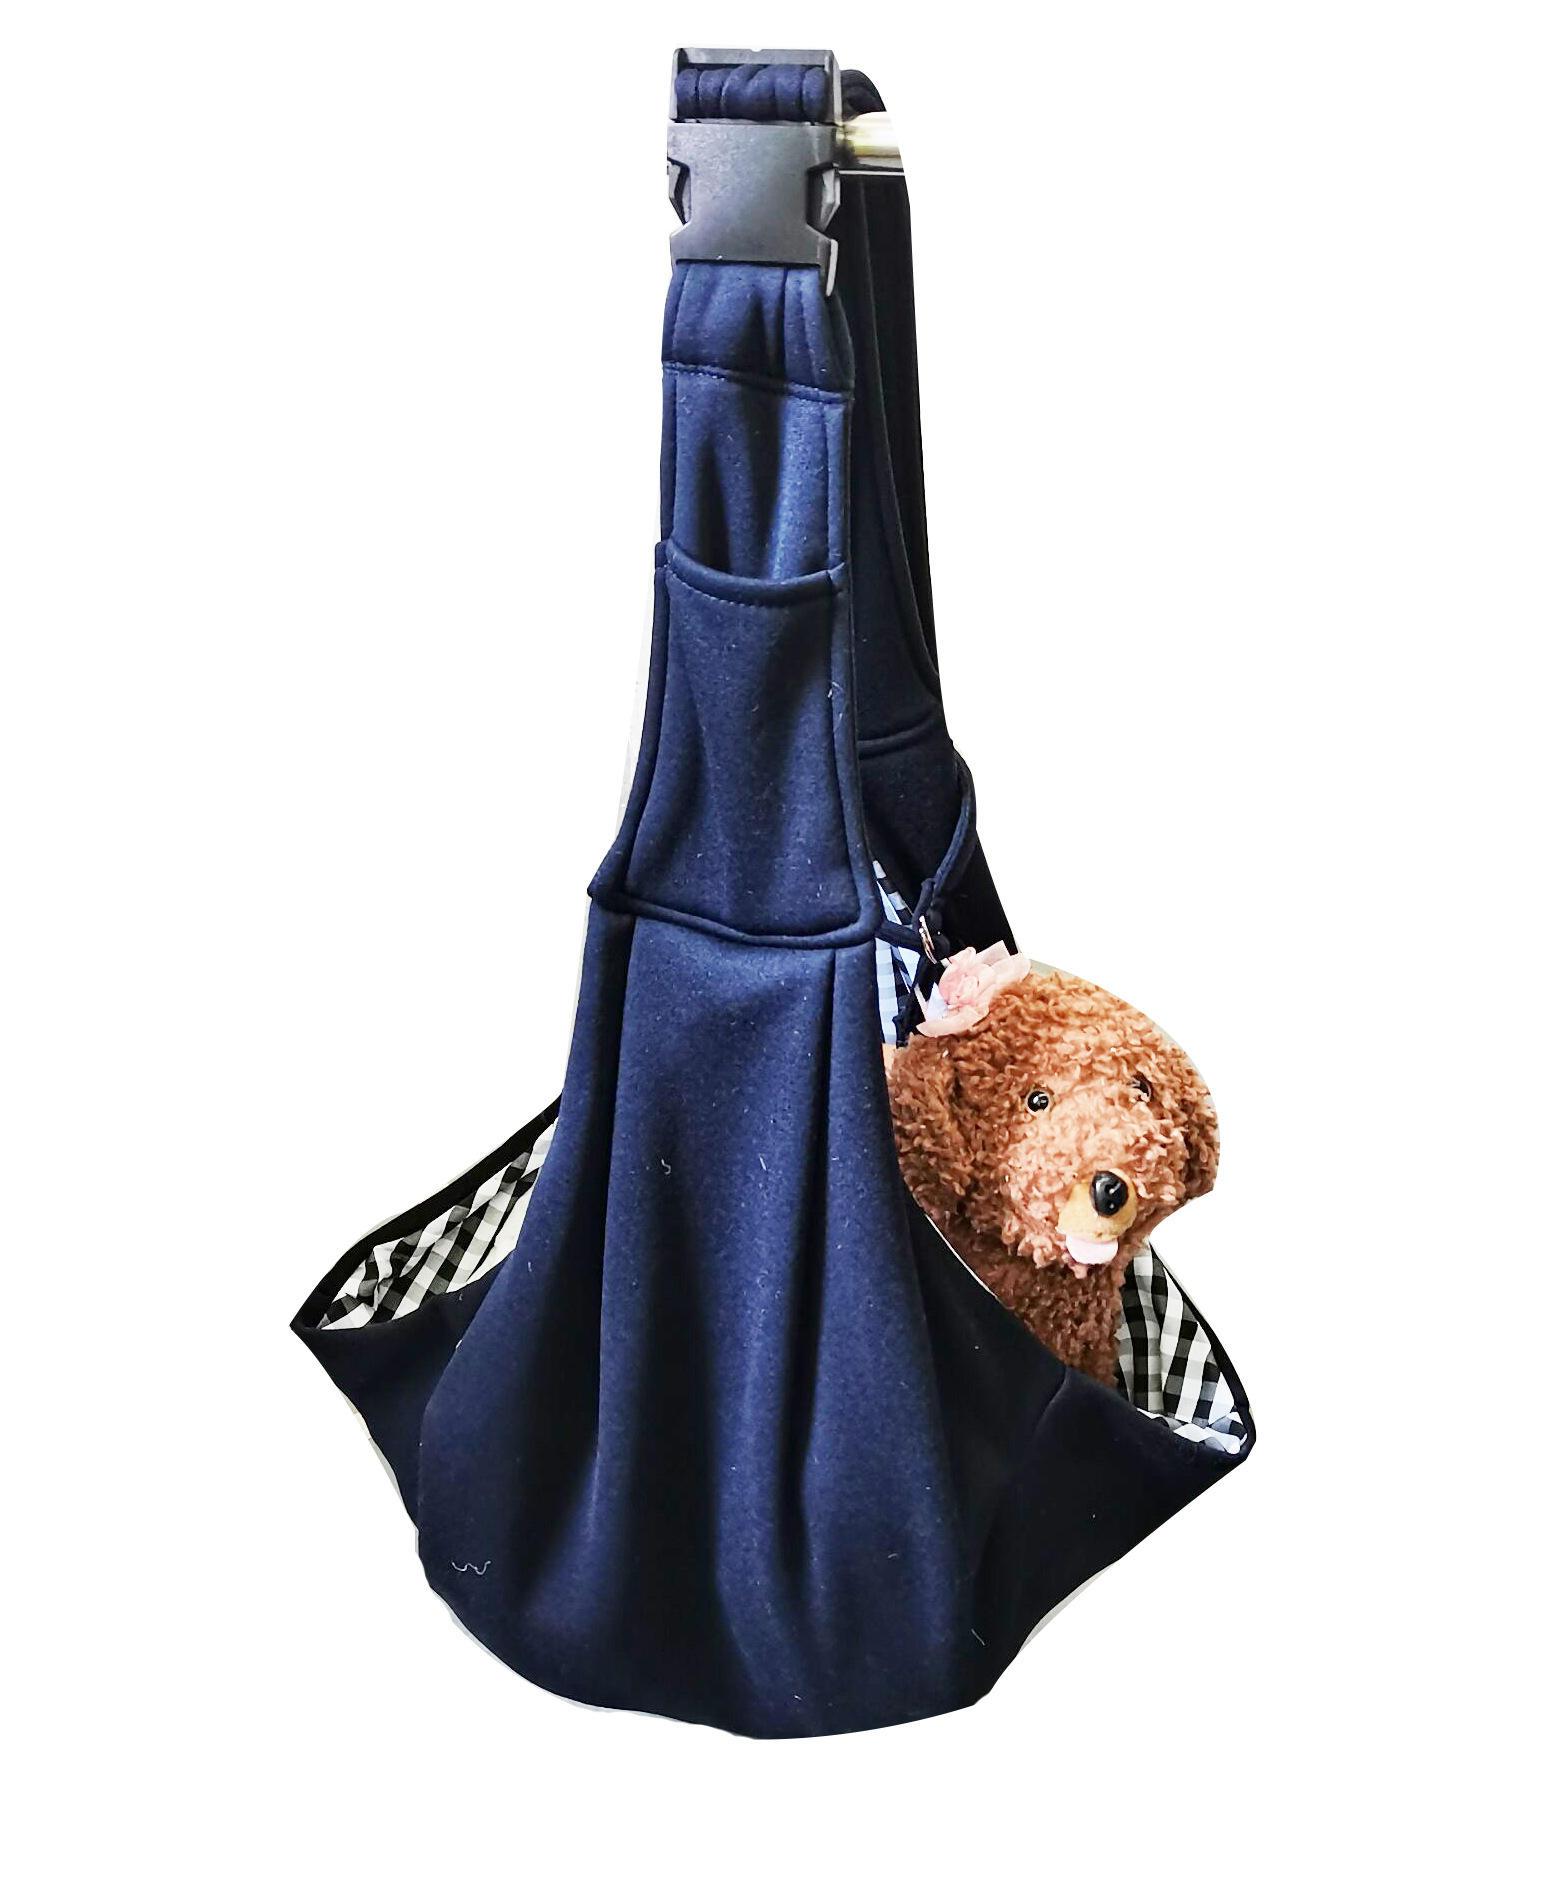 Portable Oblique Cross Out Pet Bag Large Capacity High Quality Foldable Cat Carrier Travel Dog Carrier Bag